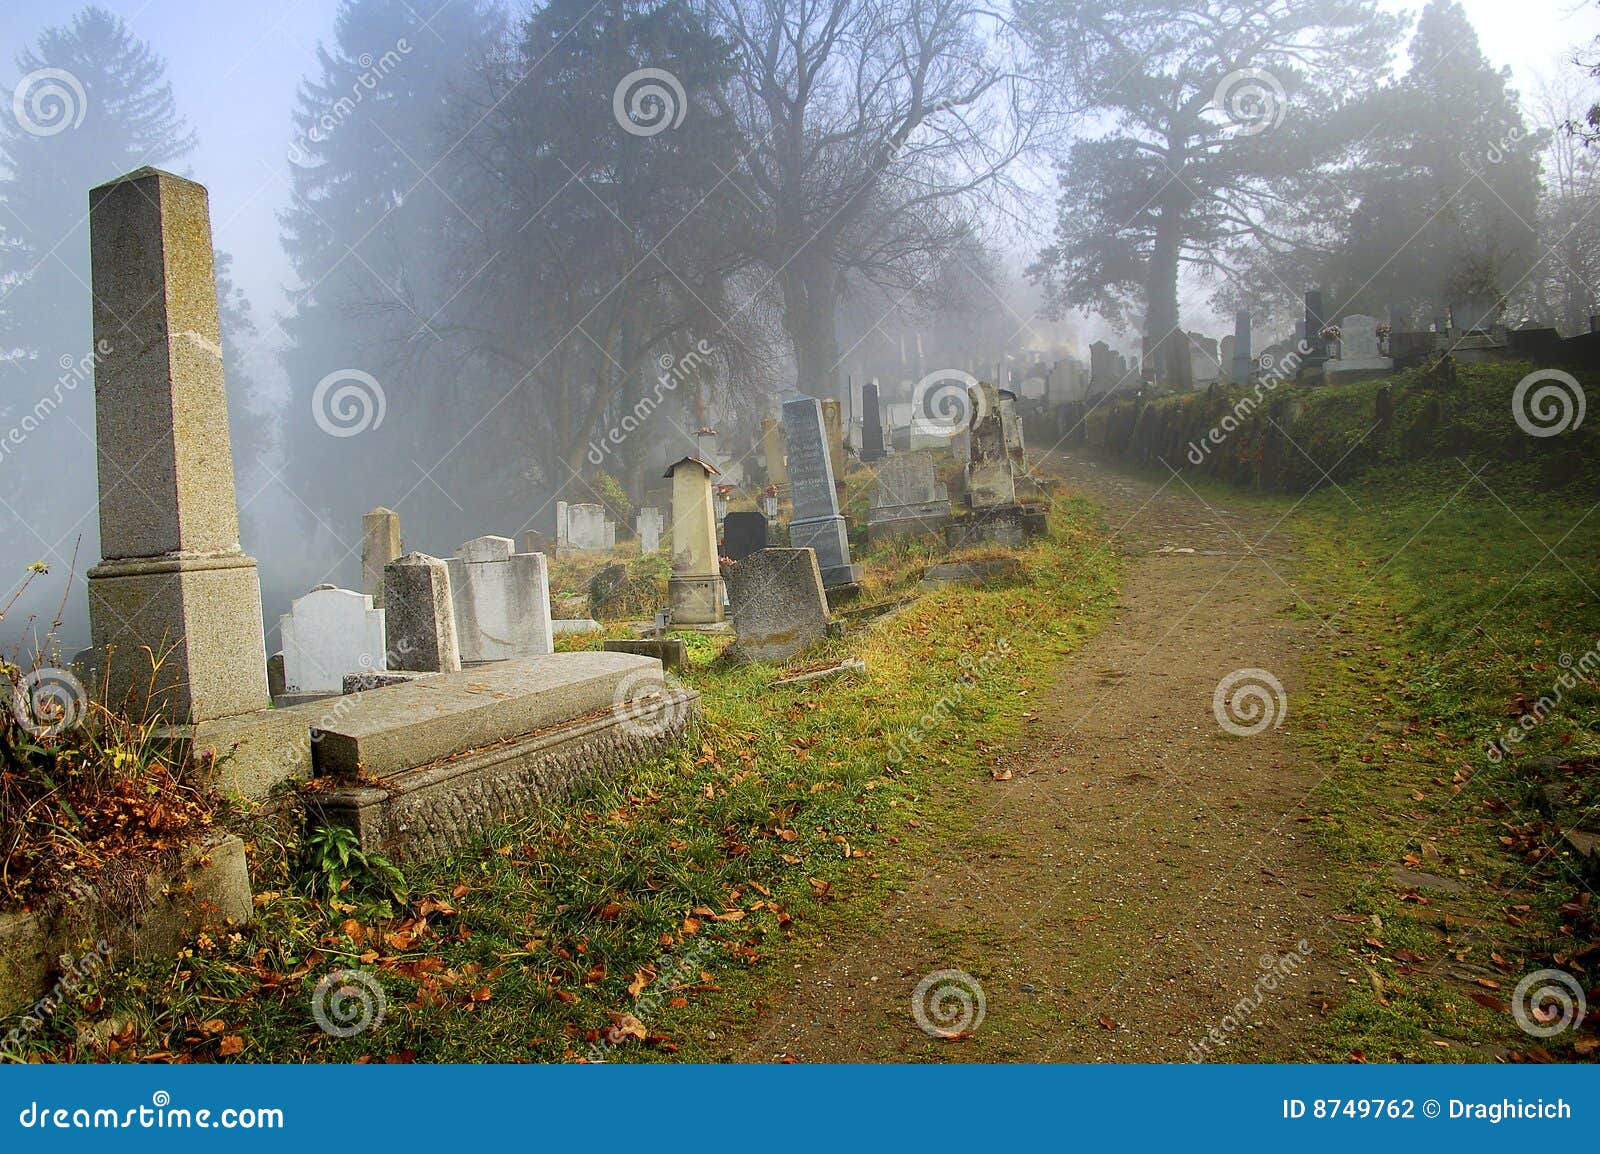 graveyard in transylvania